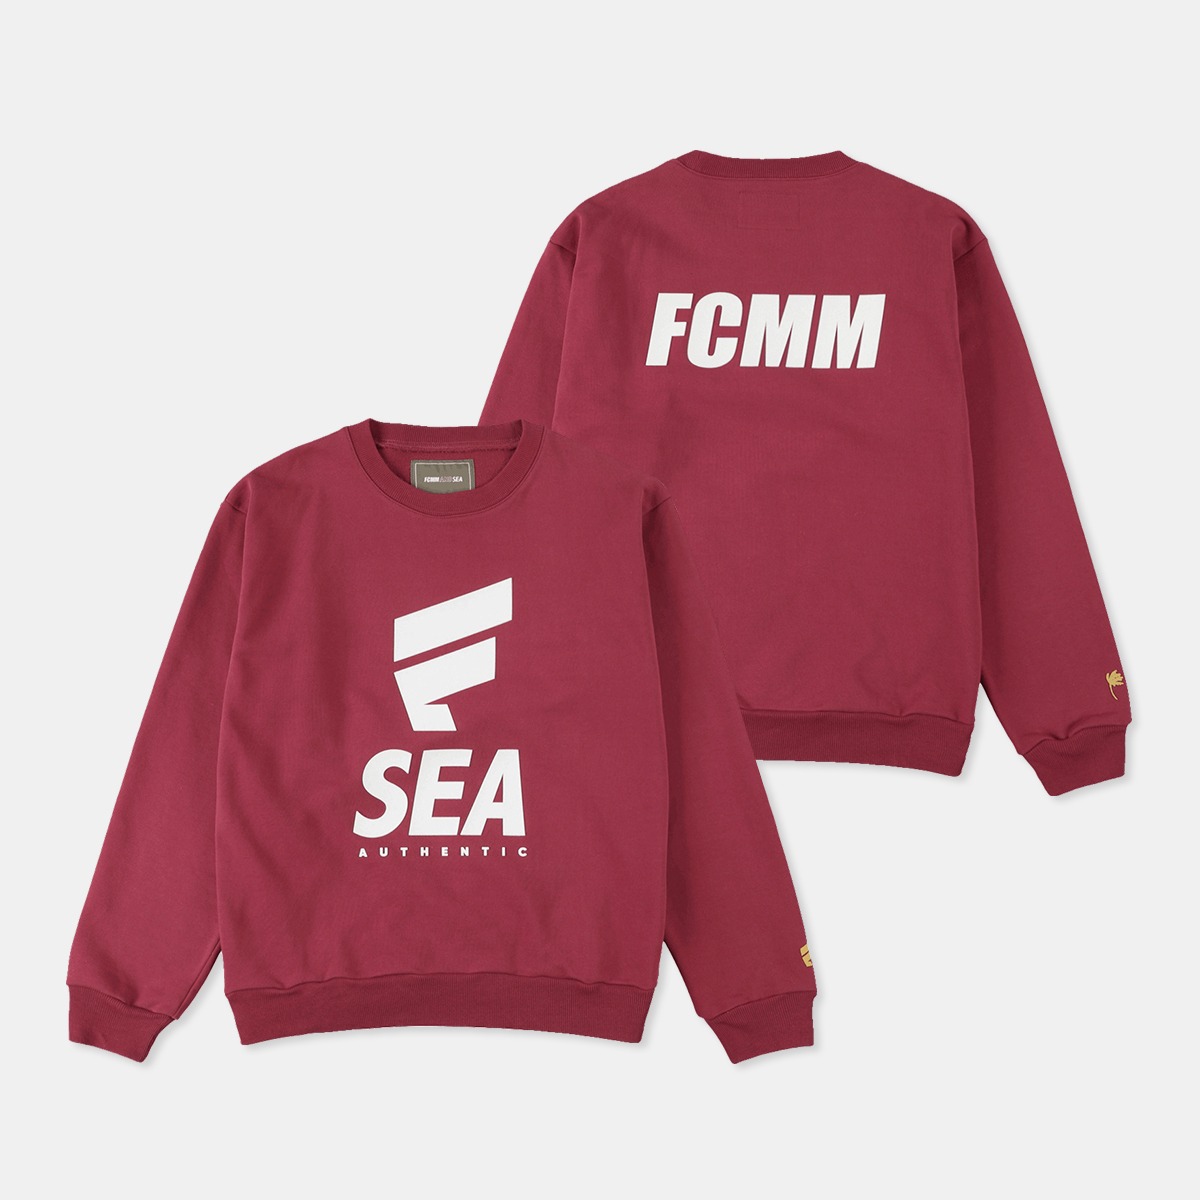 FCMM x WIND AND SEA Sweat shrit - WINE RED